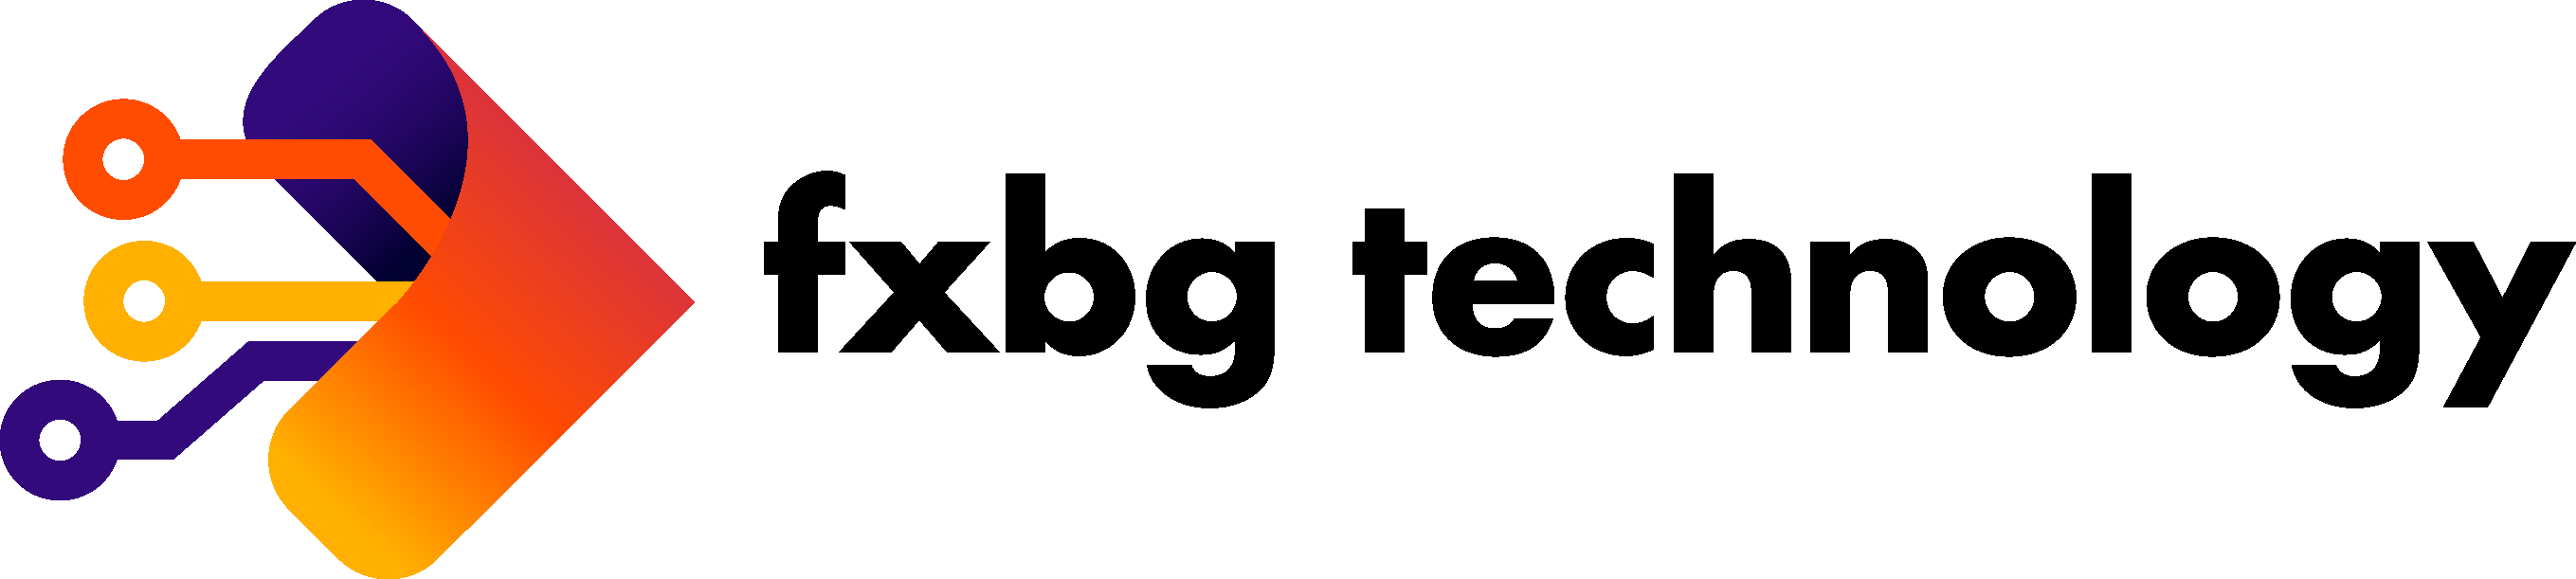 fredericksburg technology logo